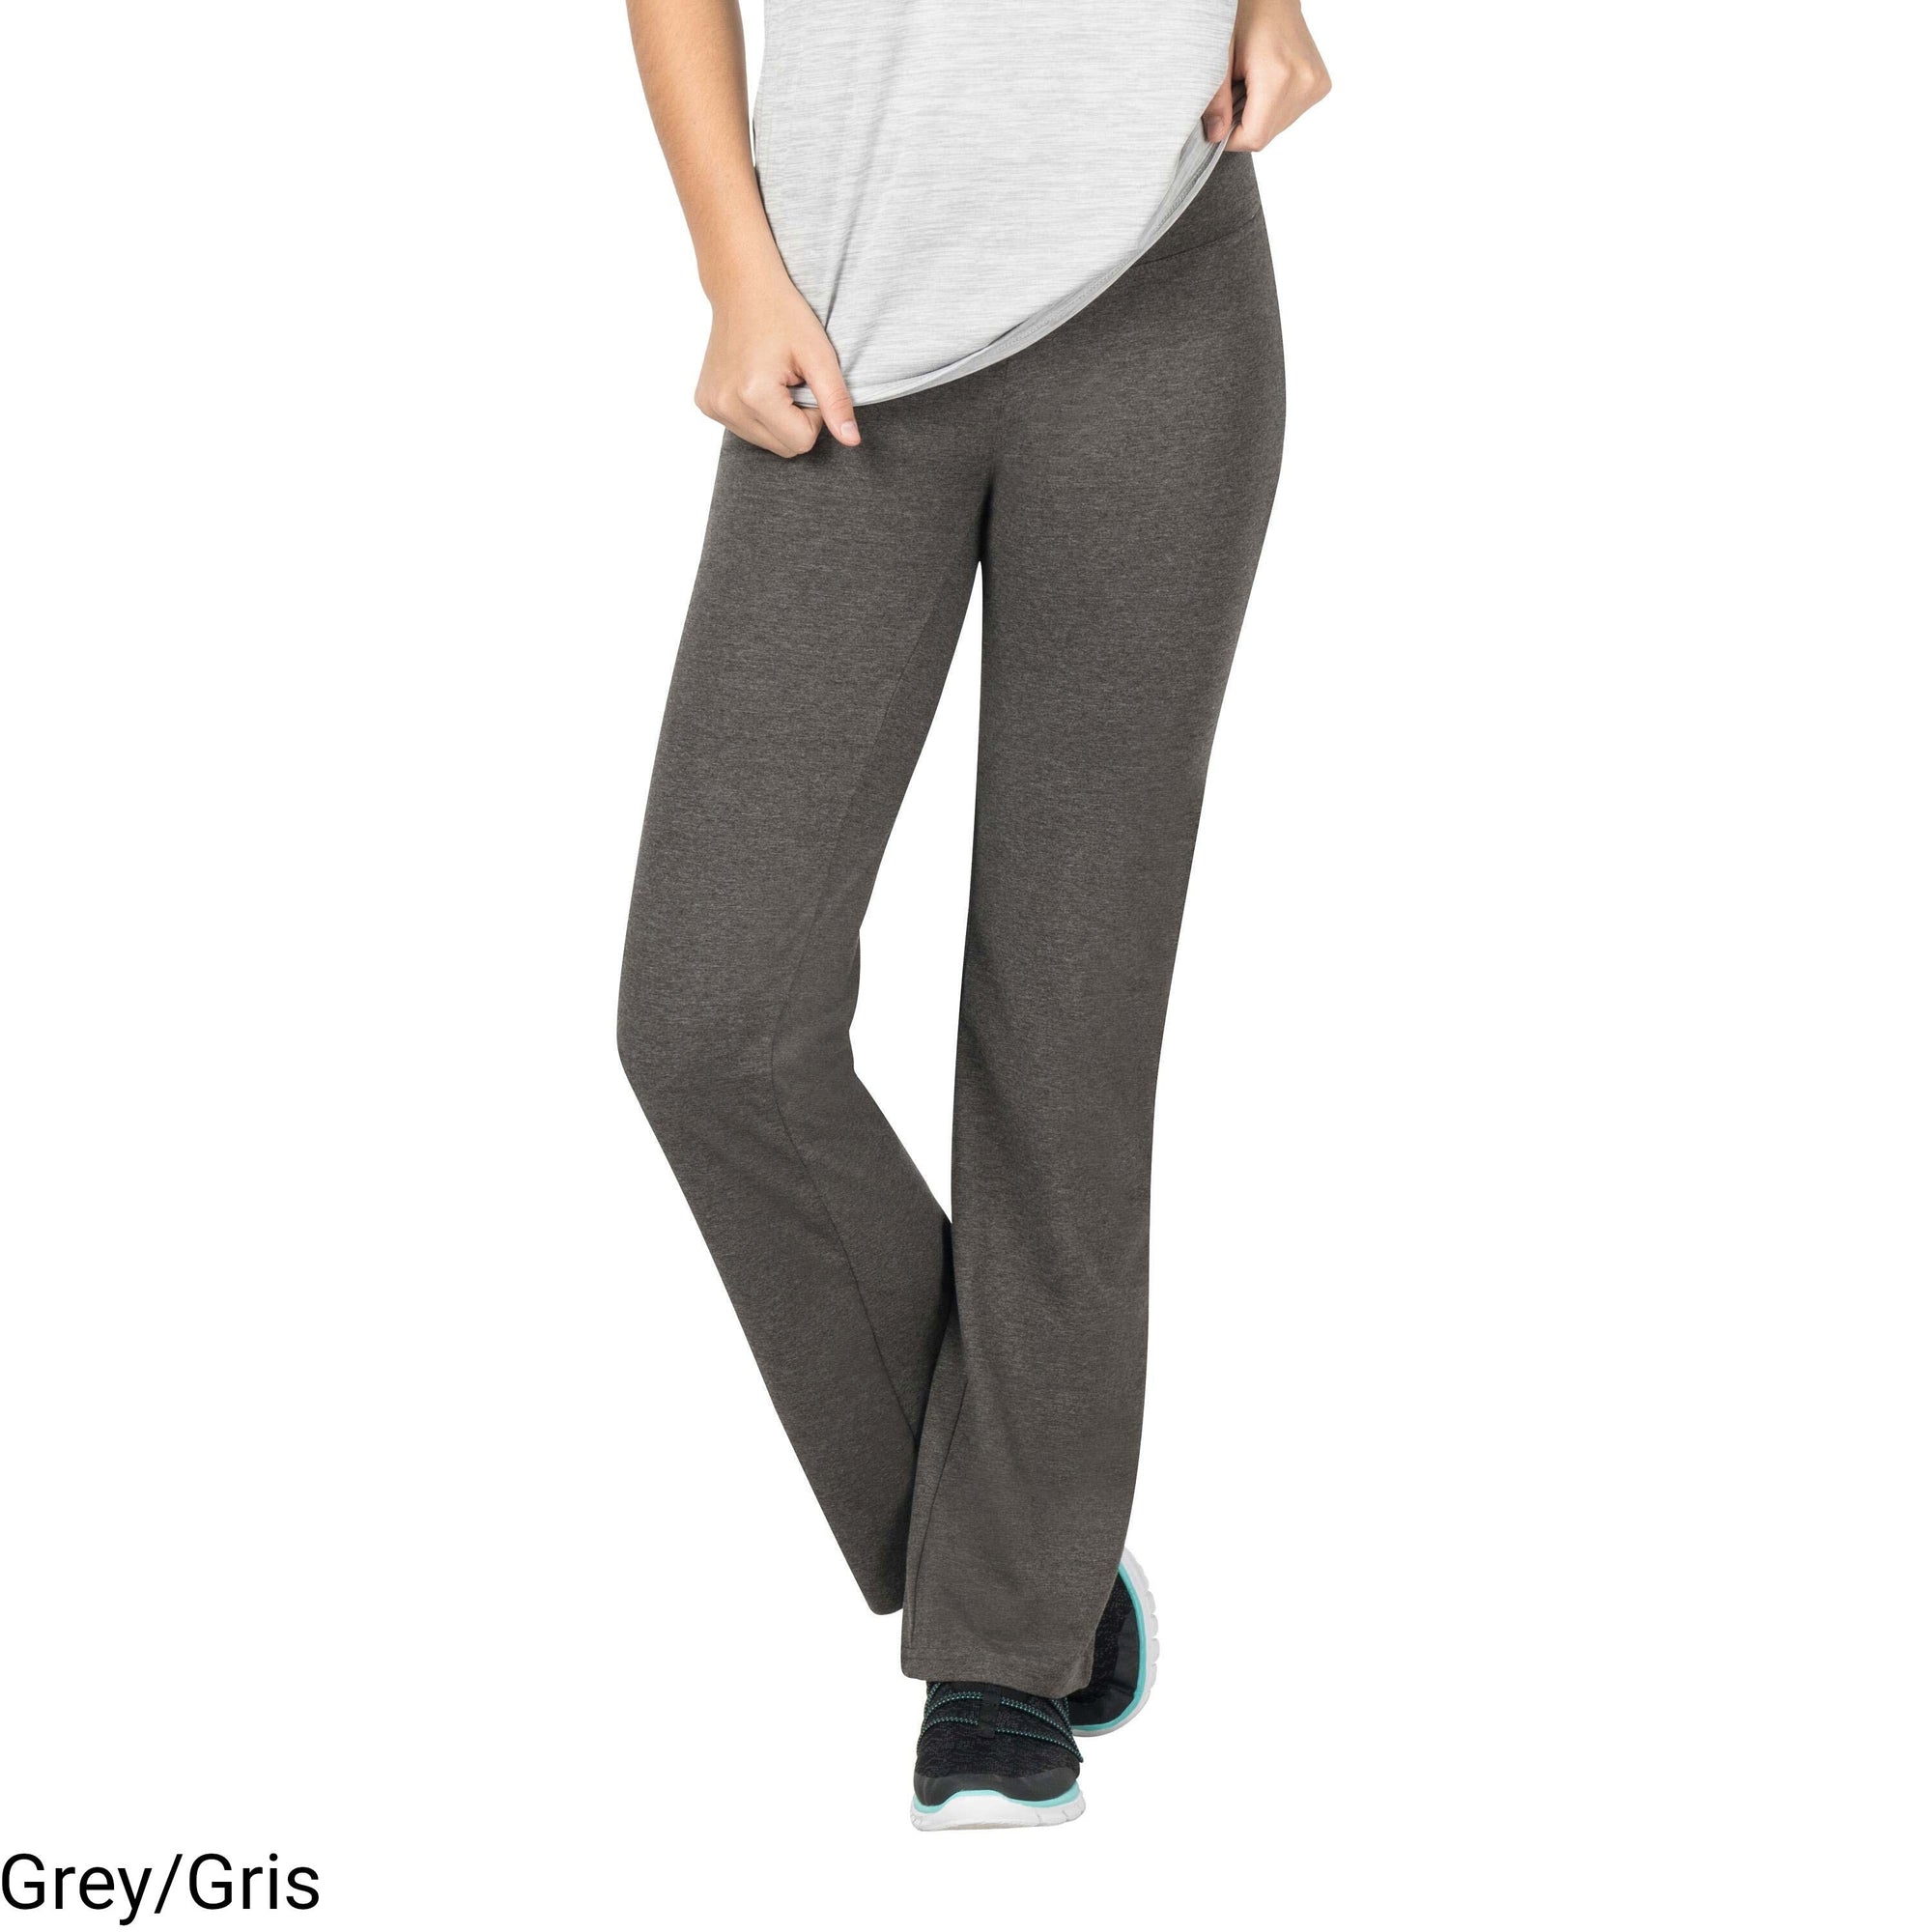 Pxiakgy yoga pants Women's Tight Elastic Quick Drying Yoga Pants Reflective  Seven Point Yoga Pants Grey + XL 